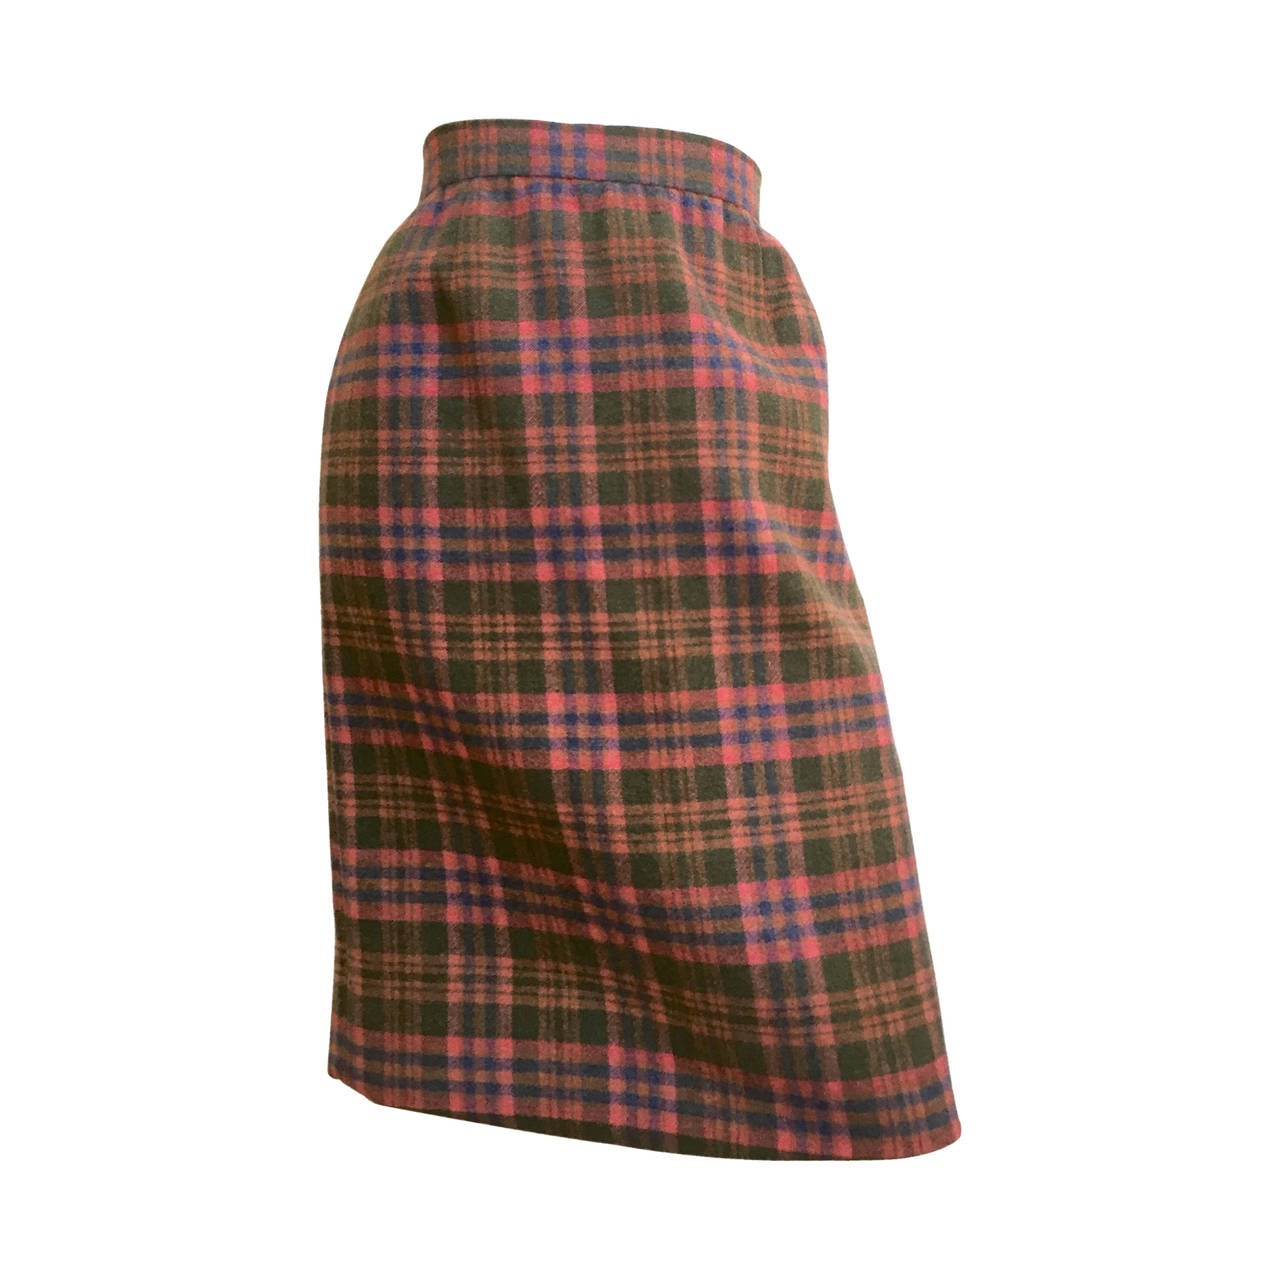 Bill Blass 1980s Plaid Wool Skirt Size 12. For Sale